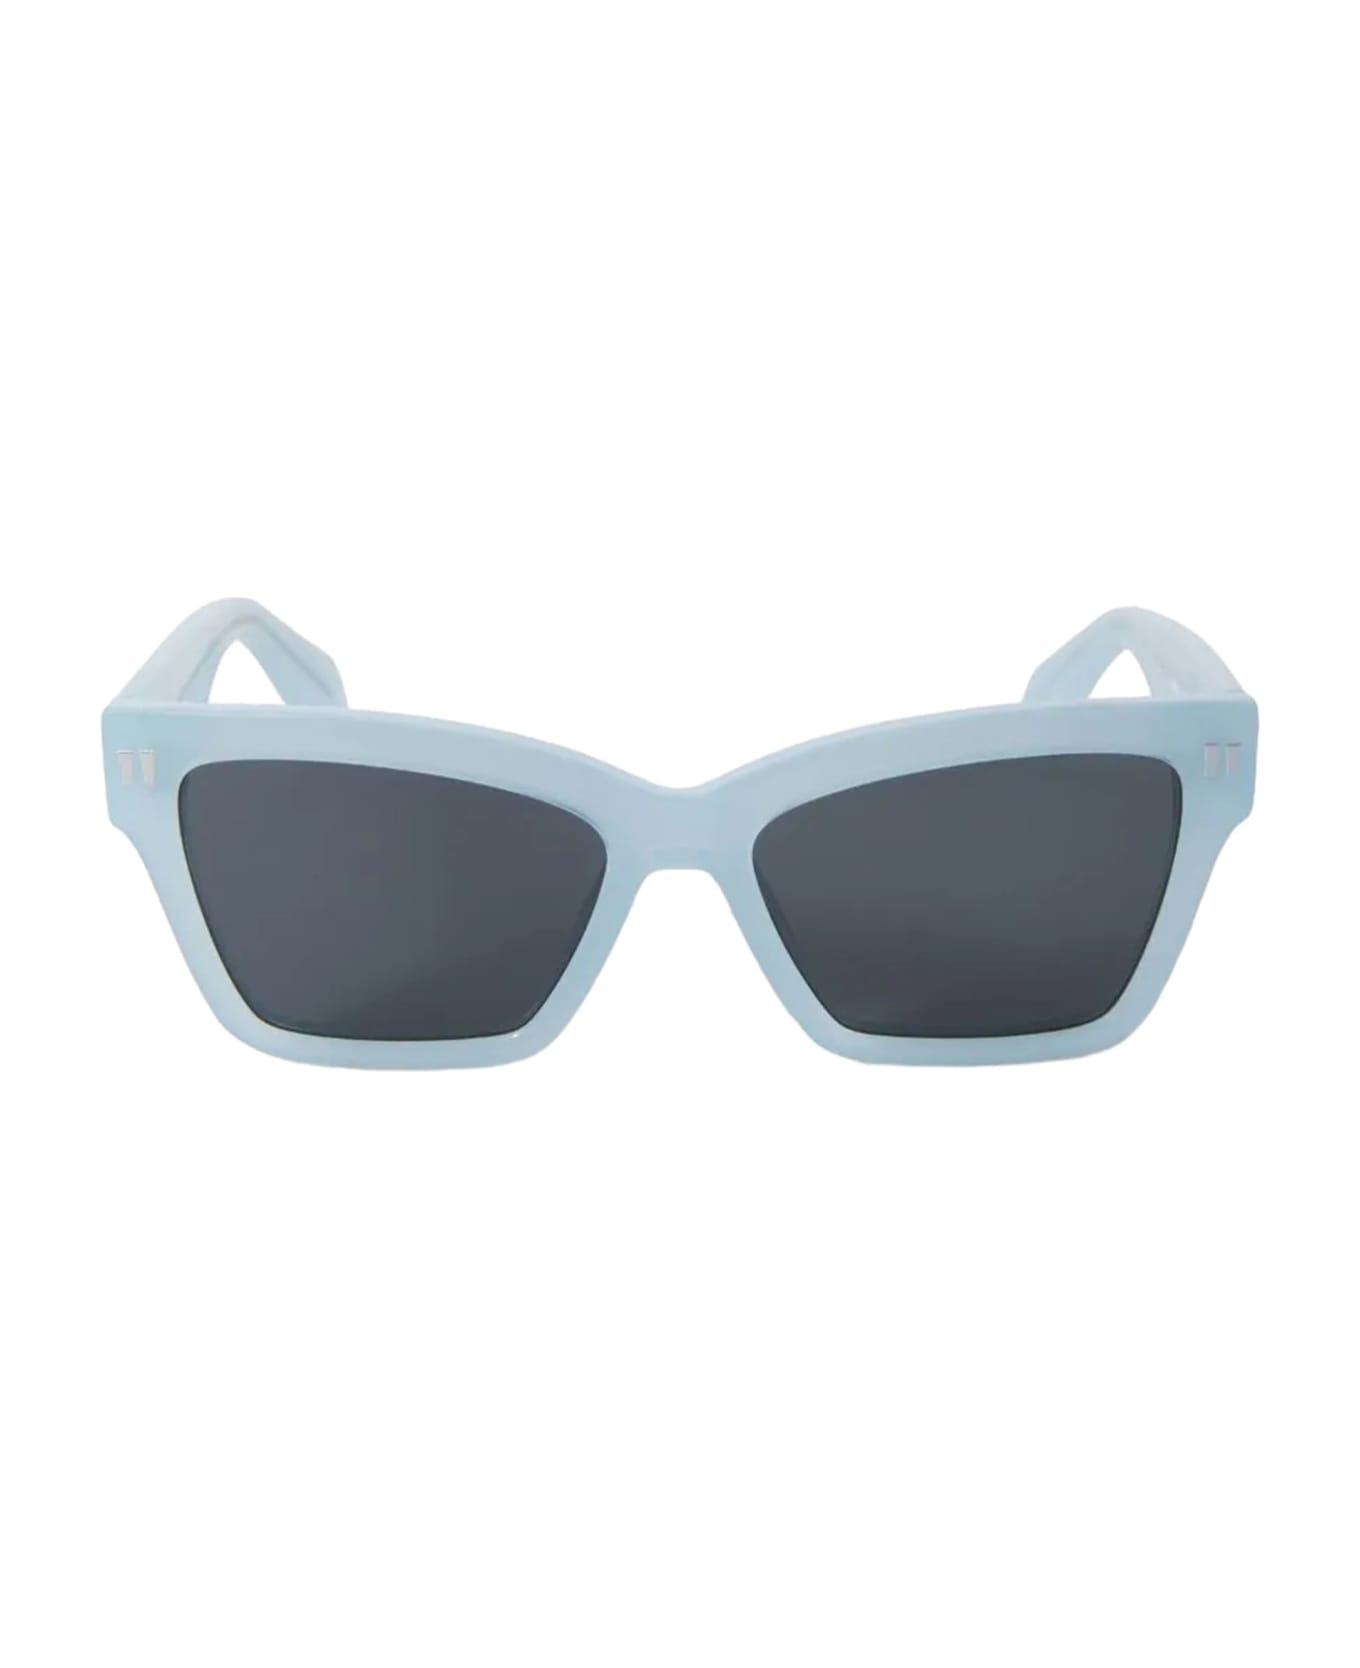 Off-White Cincinnati Sunglasses - blue